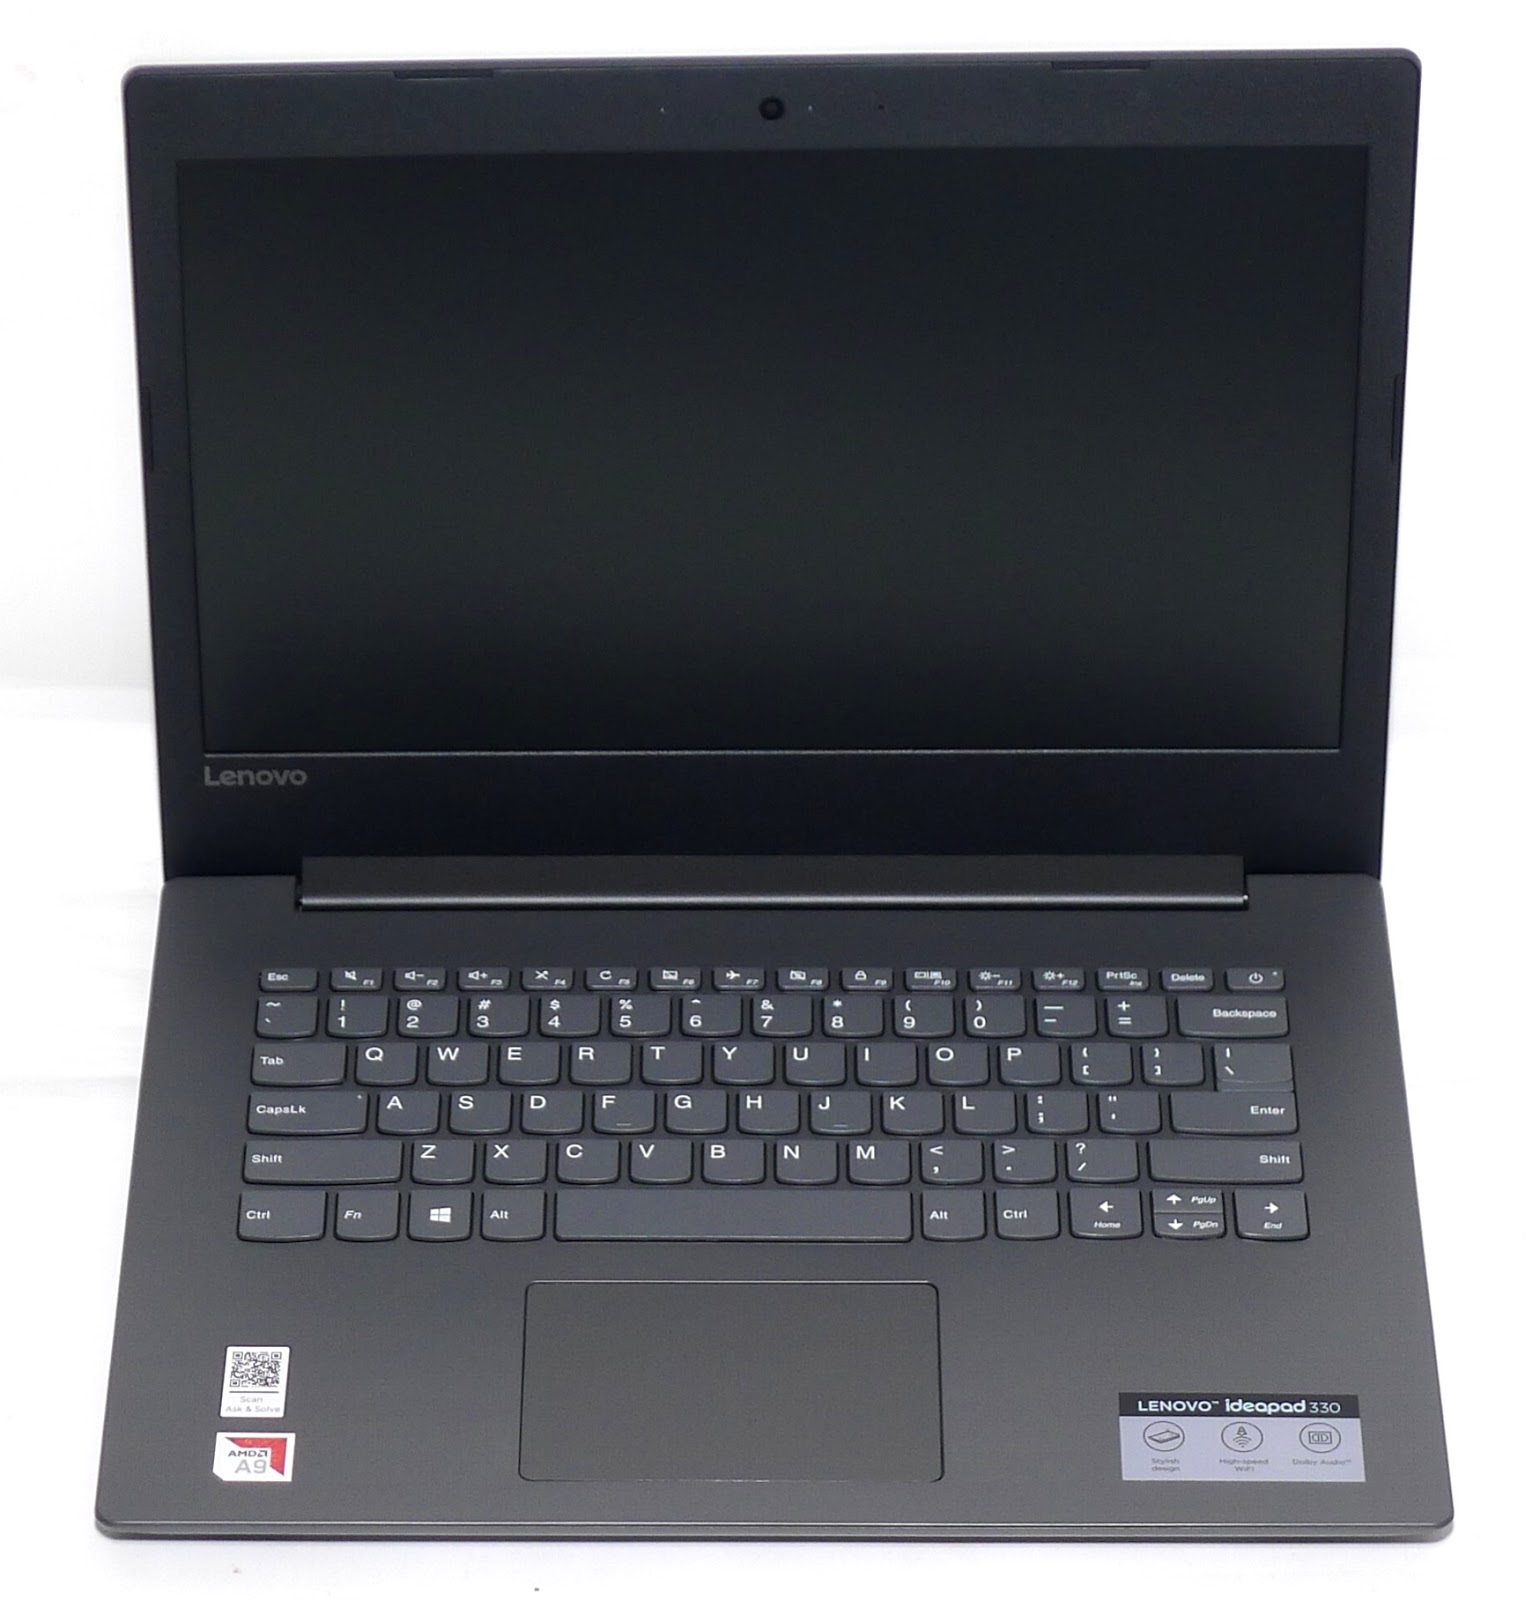 34+ Harga Laptop Lenovo Ideapad 330 14 Terpercaya